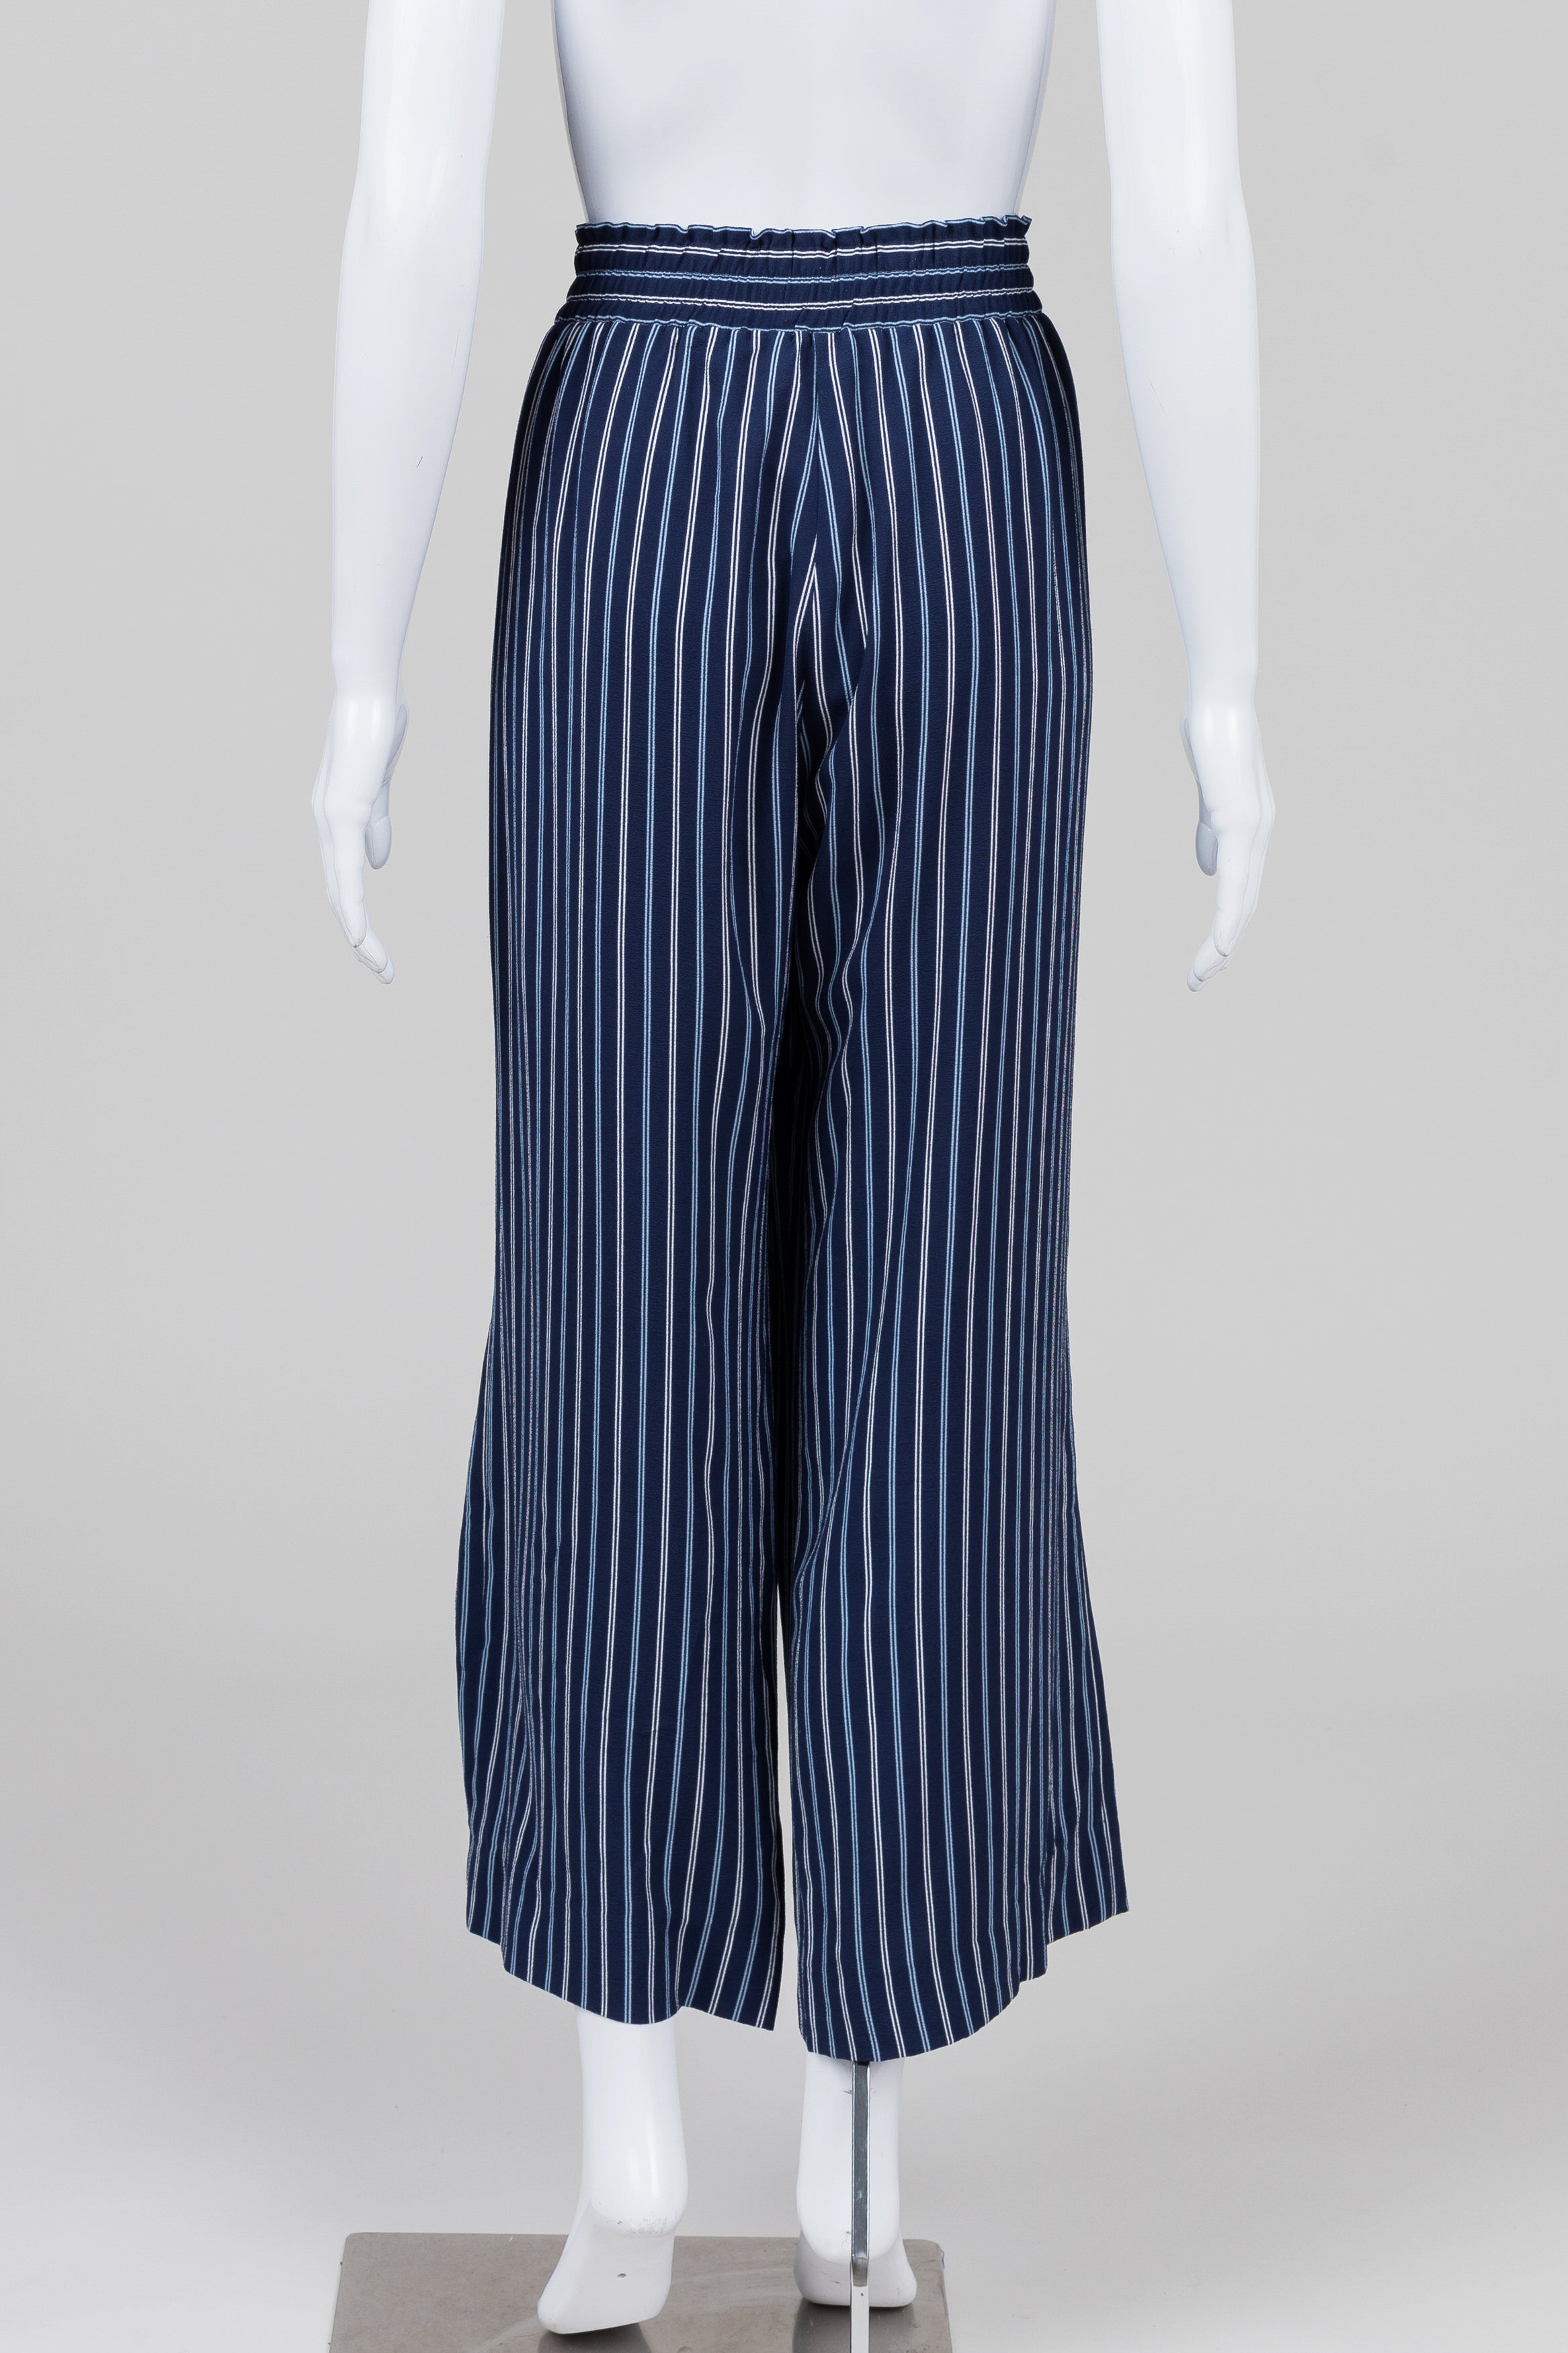 Michael Michael Kors navy stripe soft pant (L)